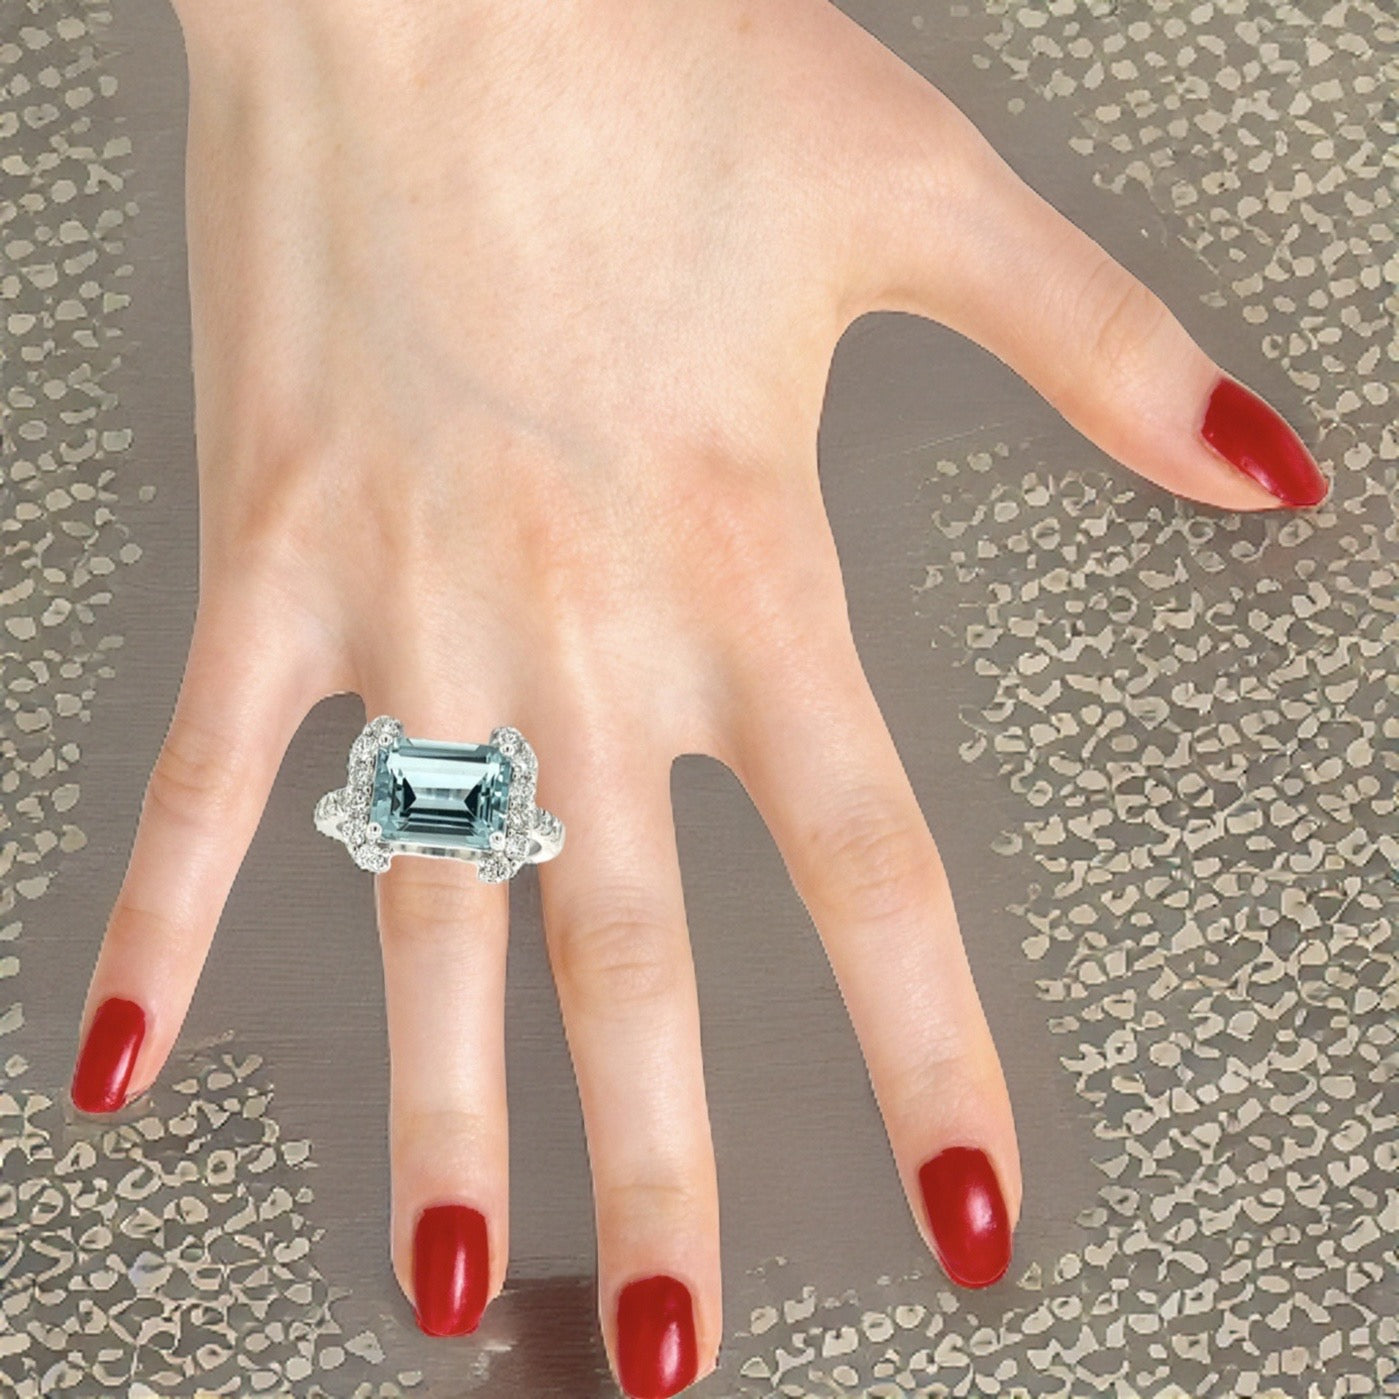 Natural Aquamarine Diamond Ring 6.5 14k white Gold 6.09 TCW Certified $4,690 217095 - Certified Fine Jewelry